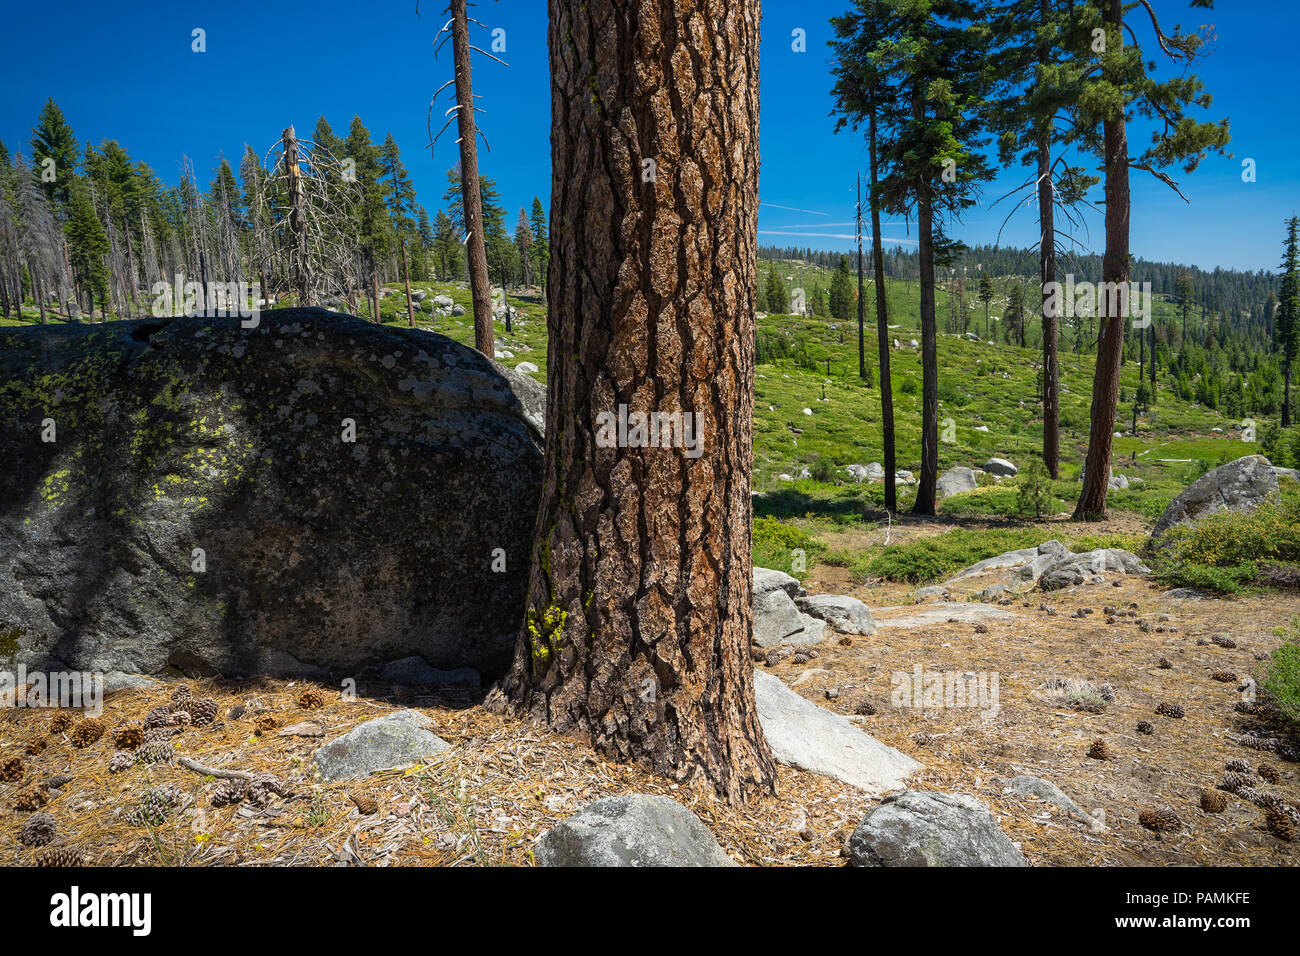 Ponderosa Pine Tree Bark Detail, With Meadow Boulders - Roadside scene along Highway 120 - Tioga Pass - Yosemite National Park Stock Photo